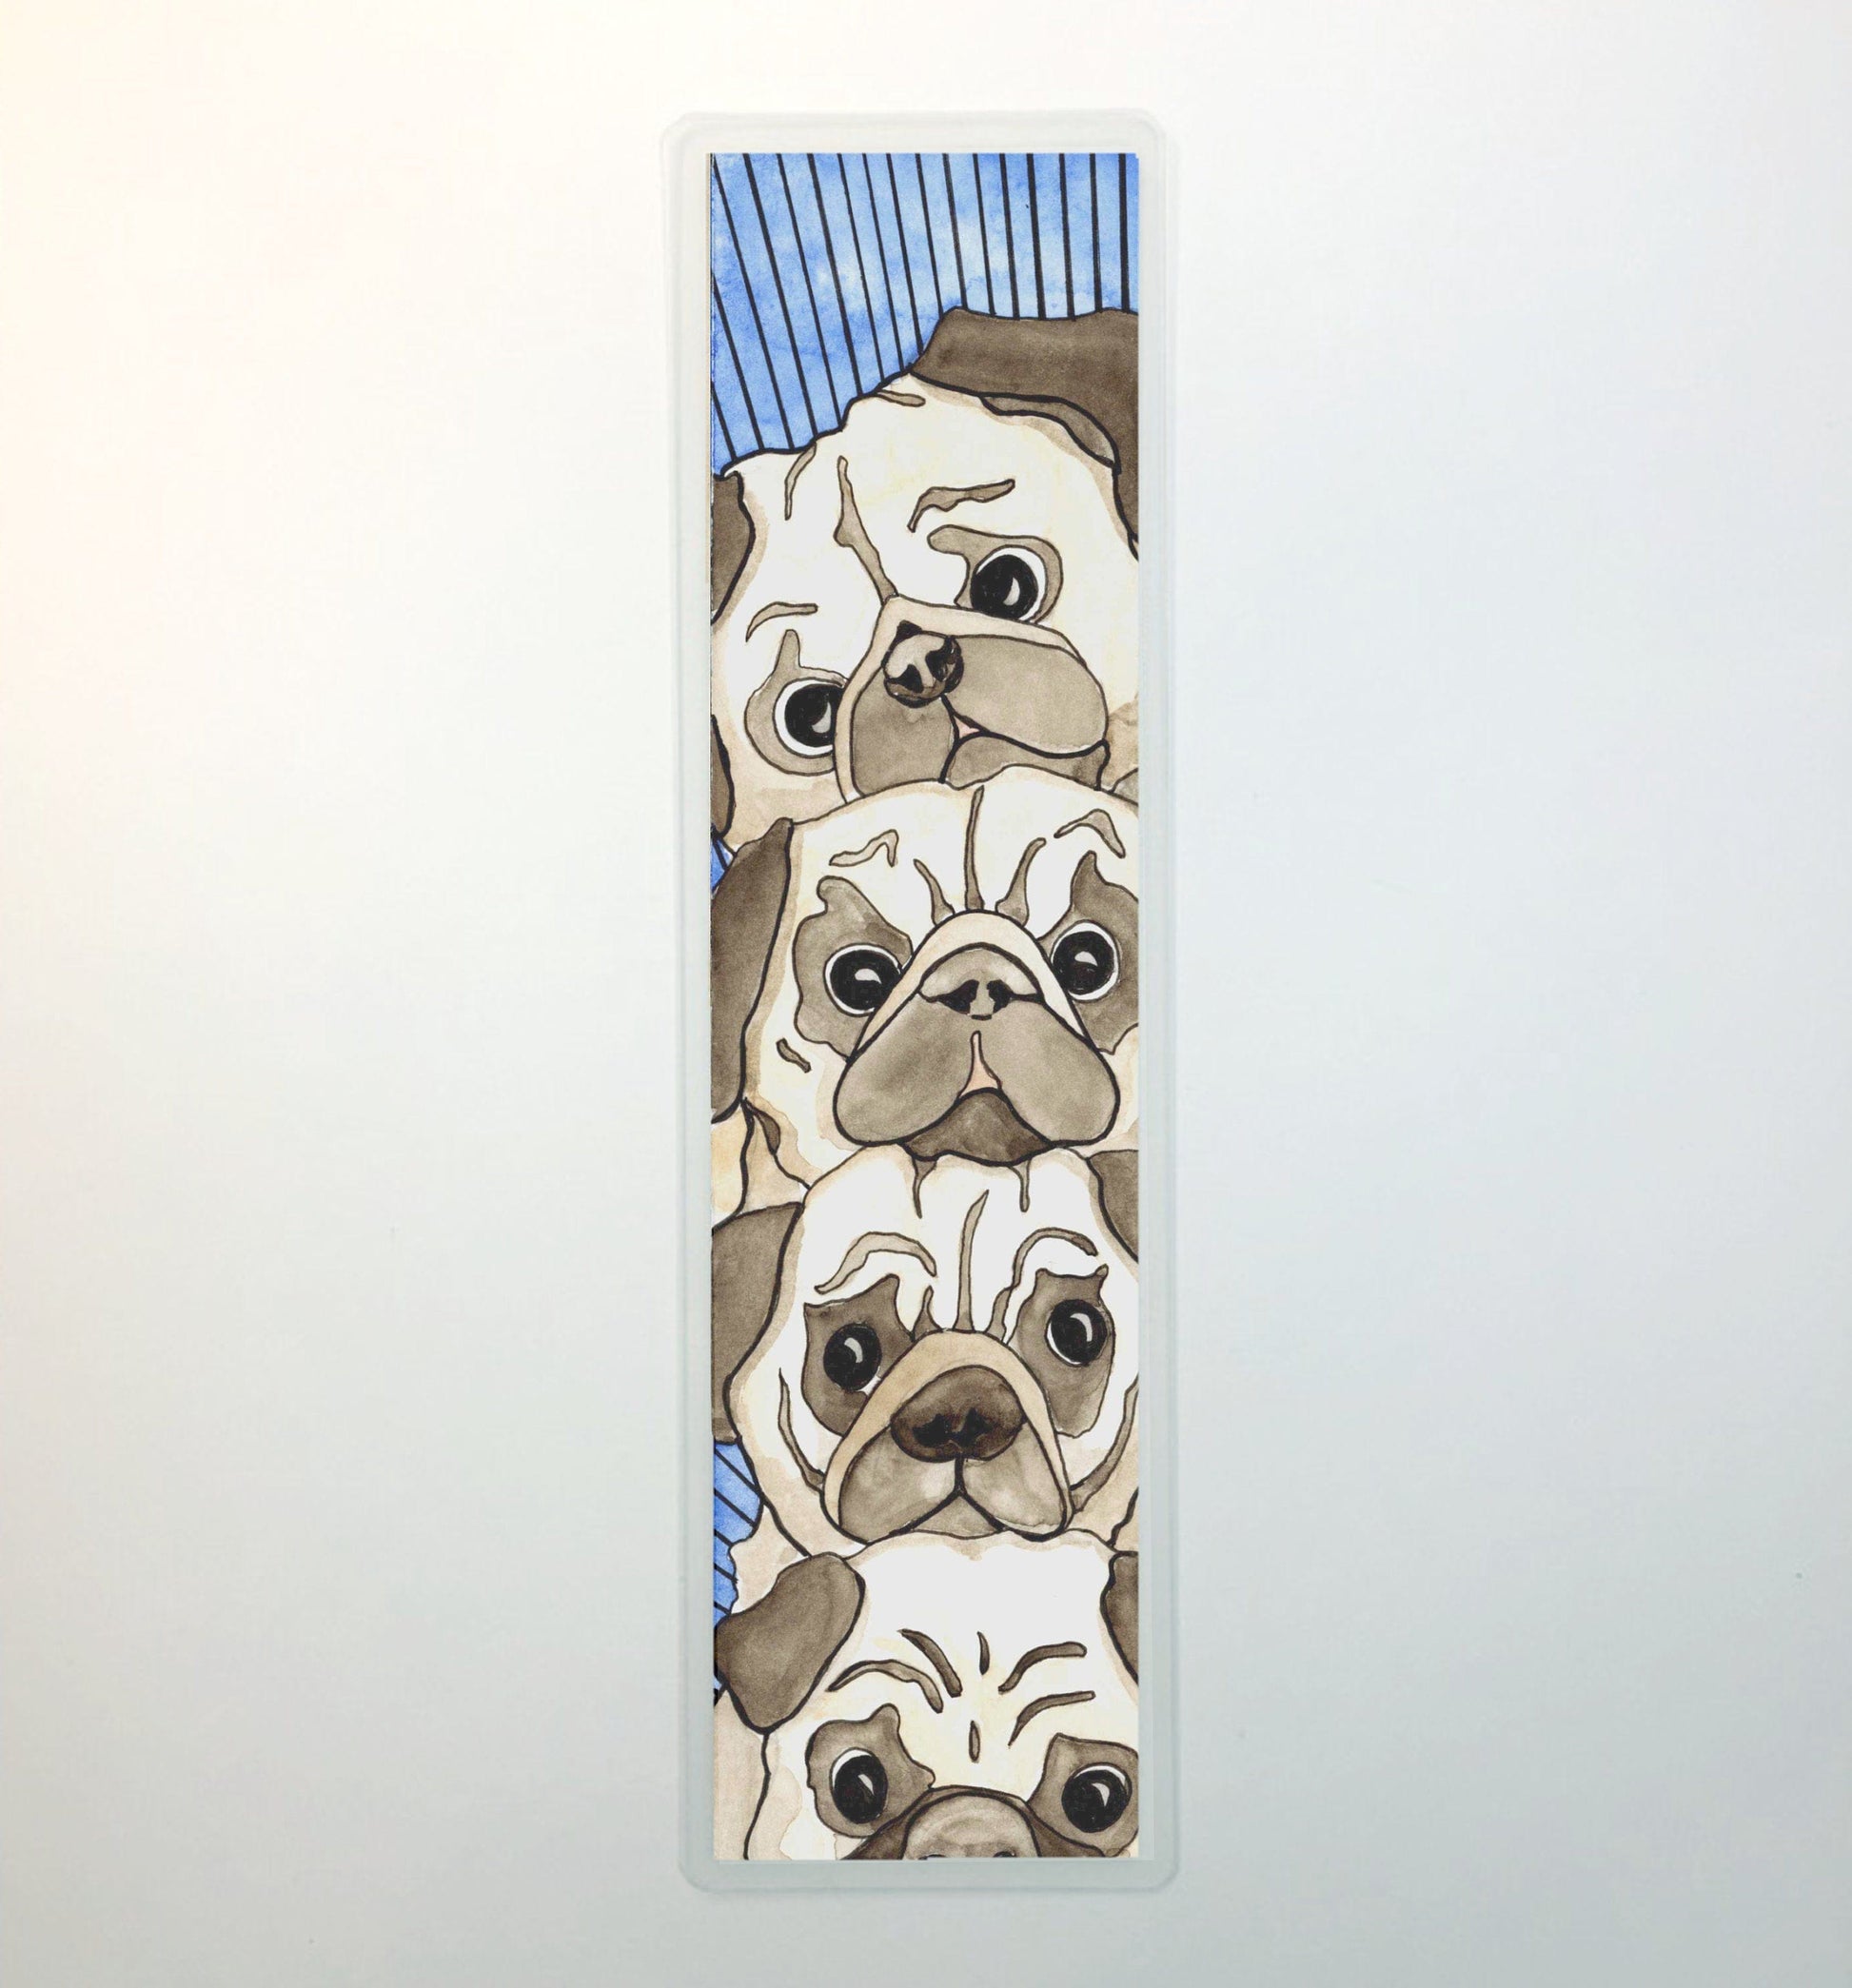 PinkPolish Design Bookmarks "Pile of Pugs" 2-Sided Bookmark